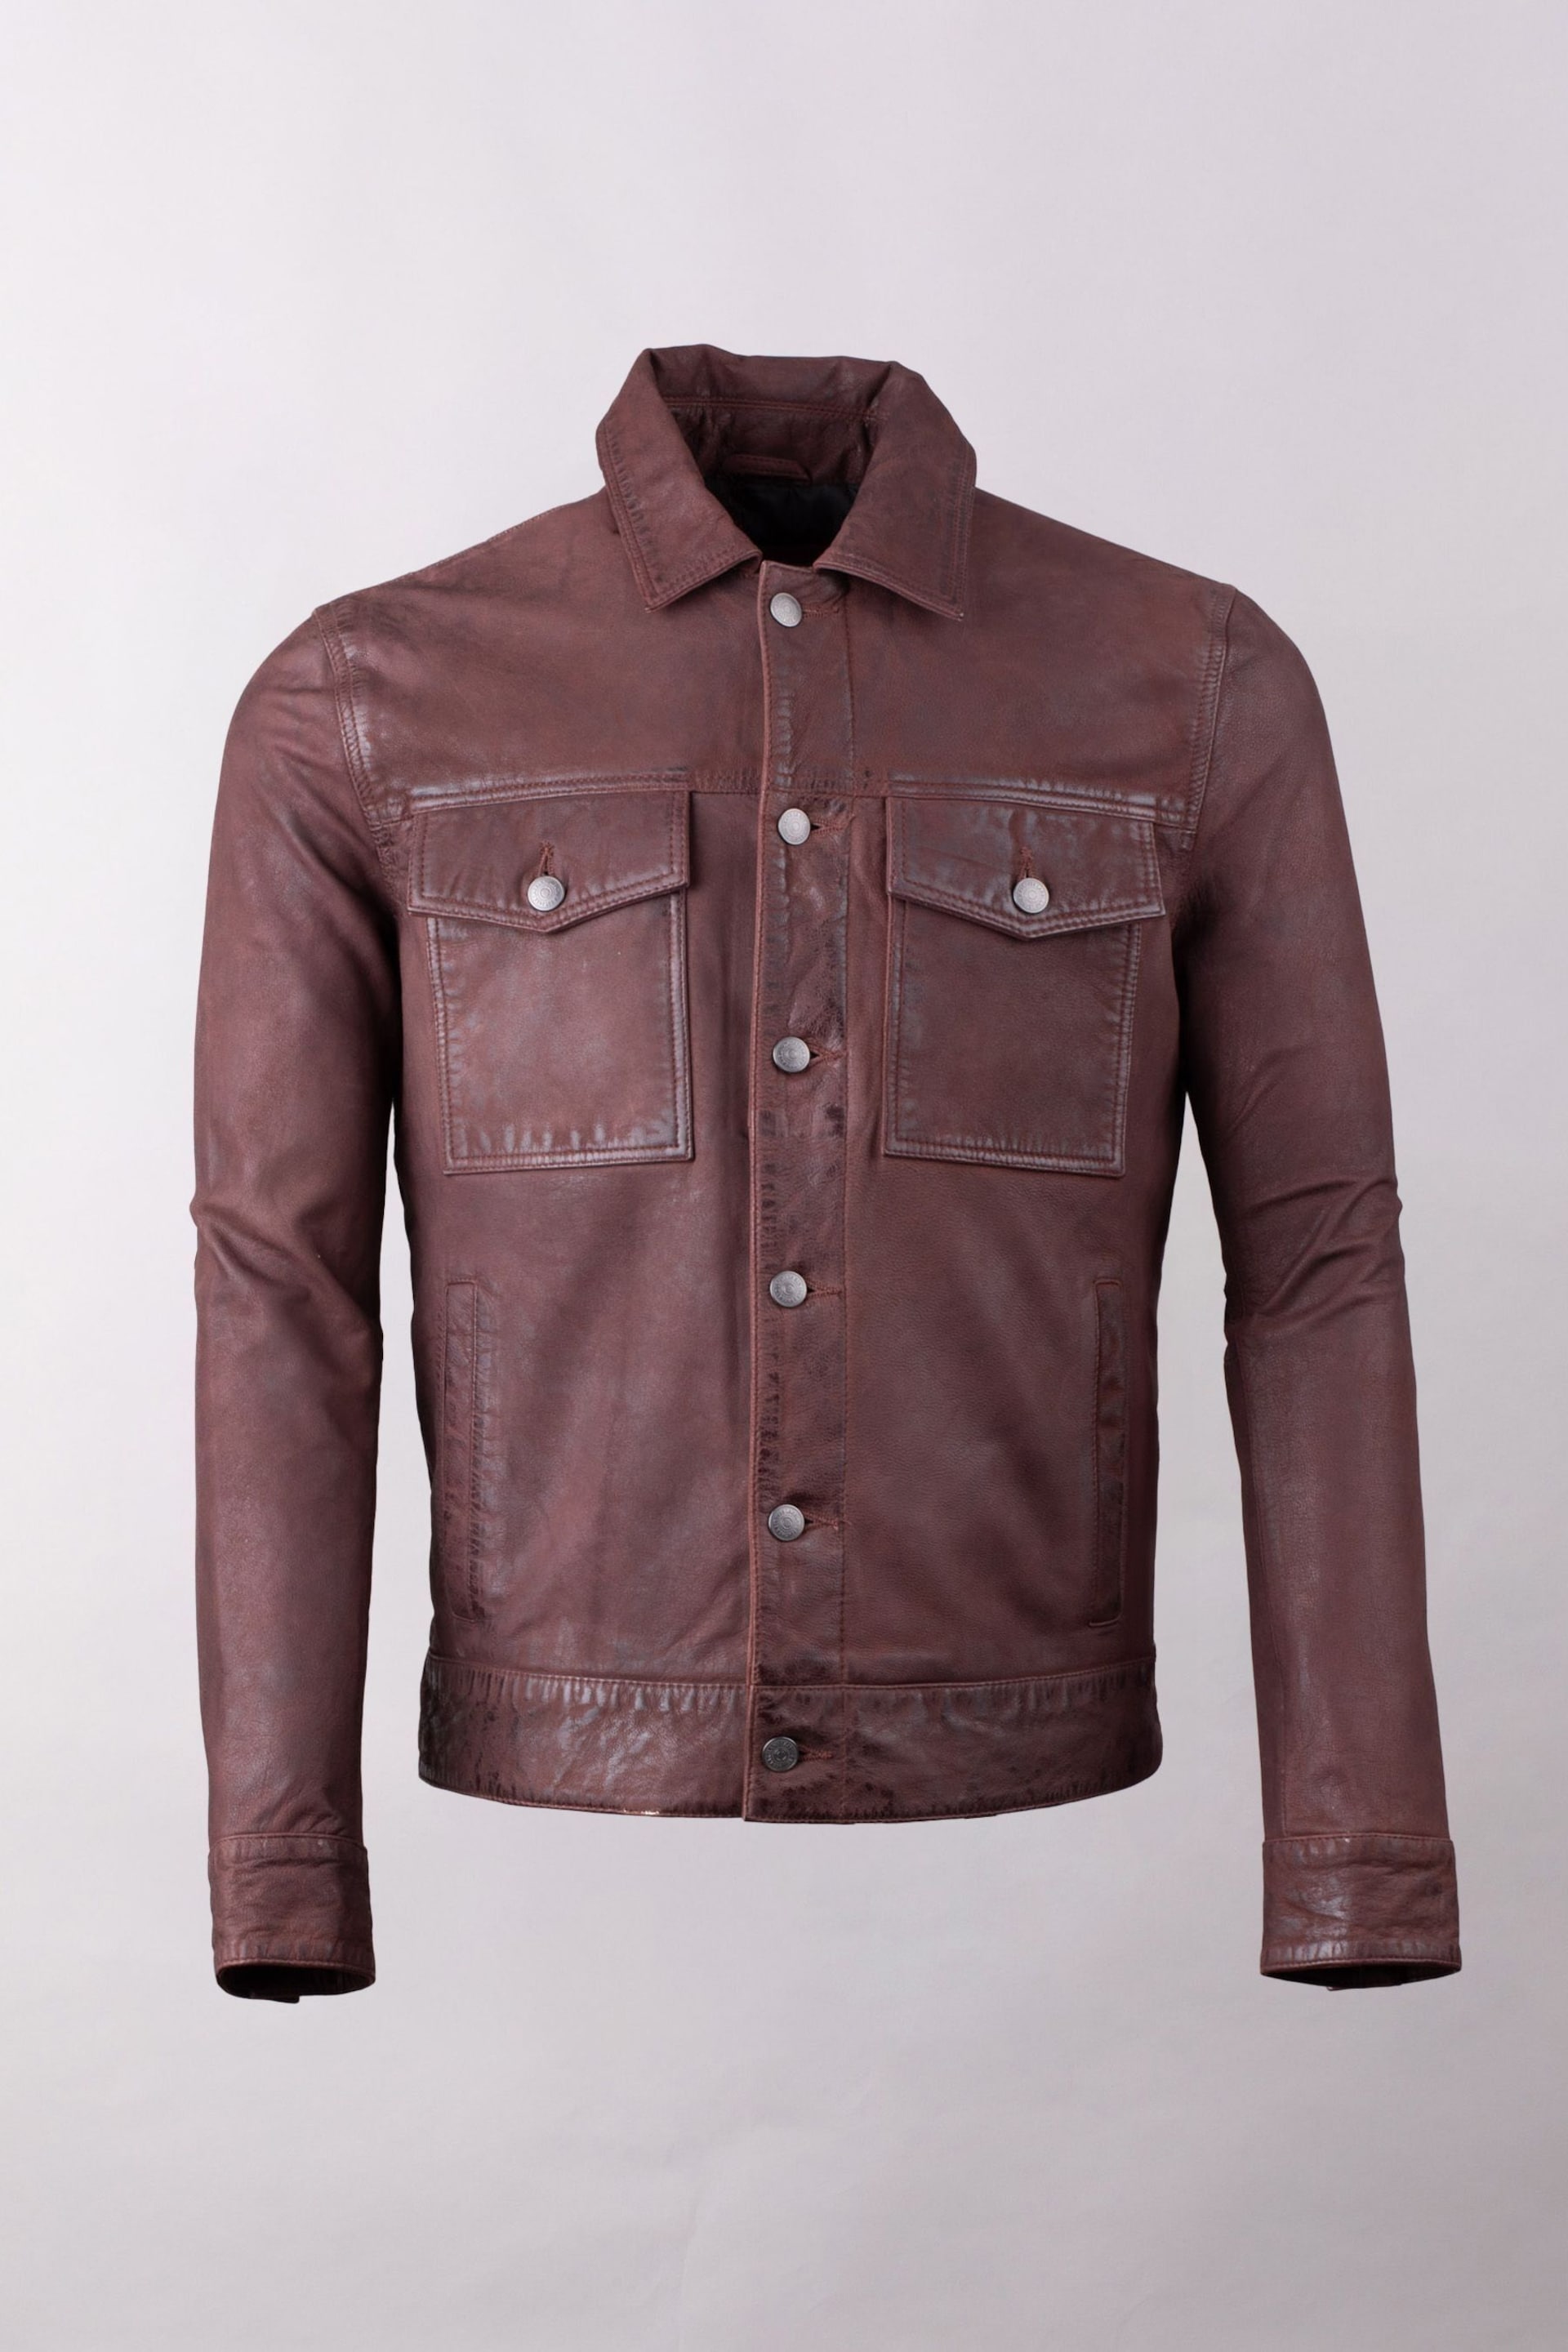 Lakeland Leather Milburn Leather Brown Jacket - Image 8 of 11